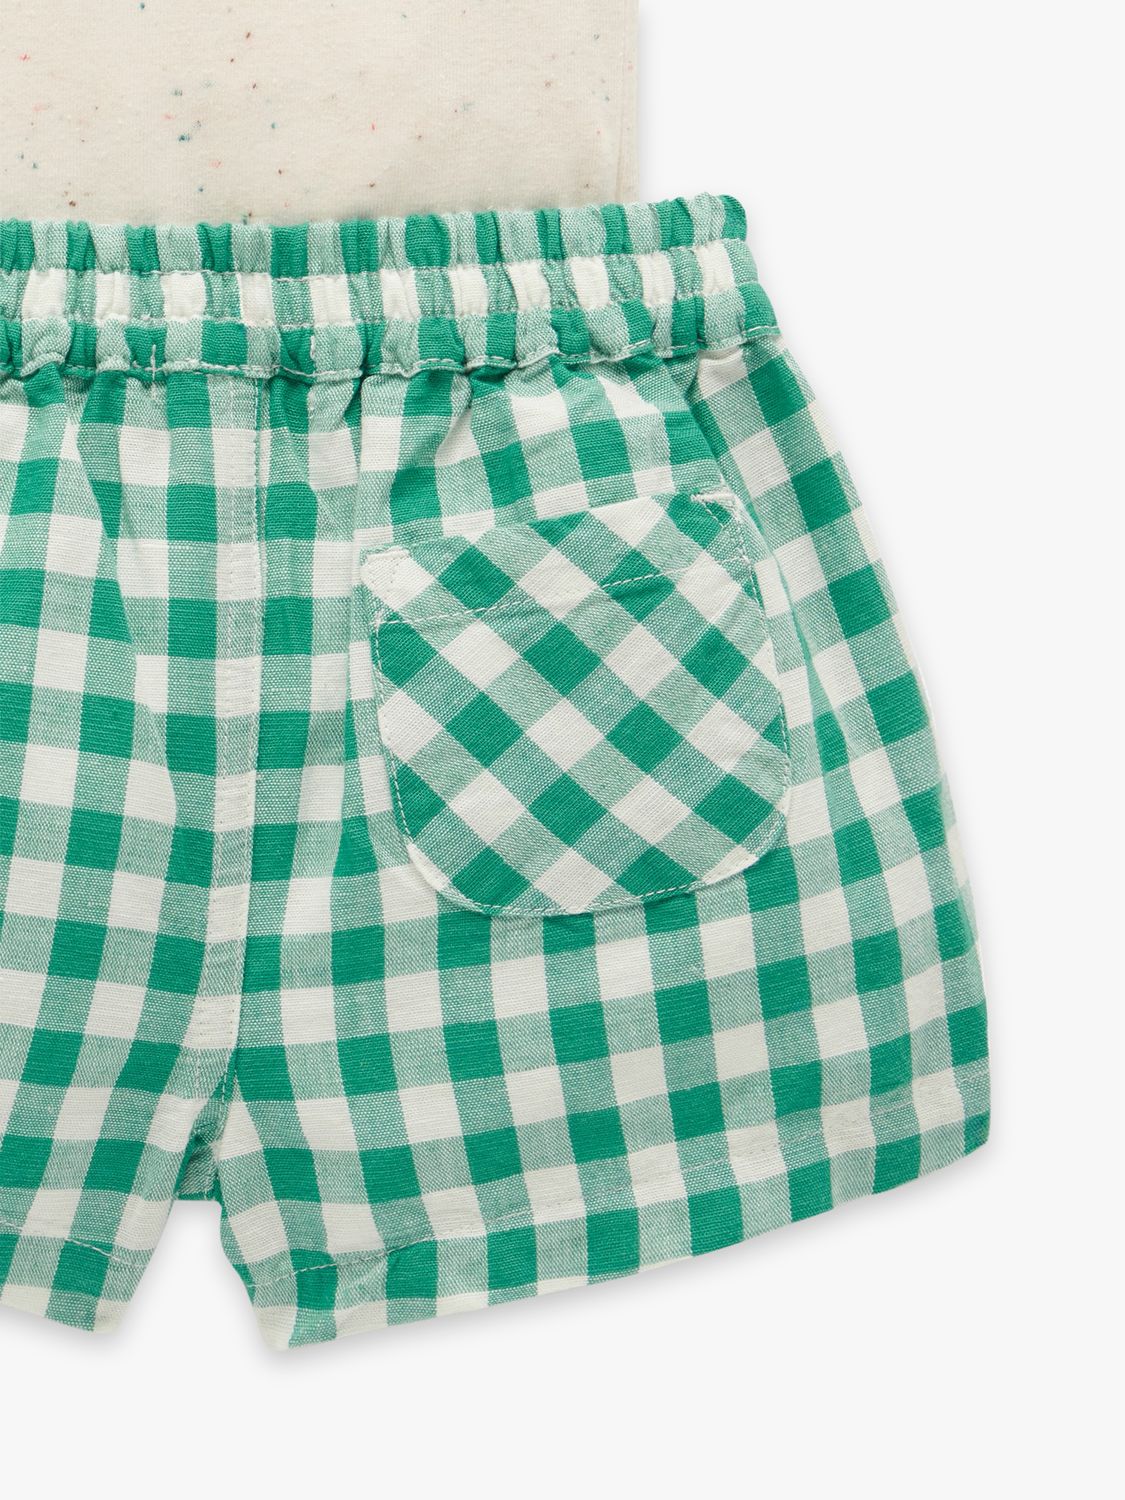 Purebaby Baby Organic Cotton & Linen Blend Elephant Appliqe T-Shirt & Gingham Shorts Set, Green/Multi, 3-6 months